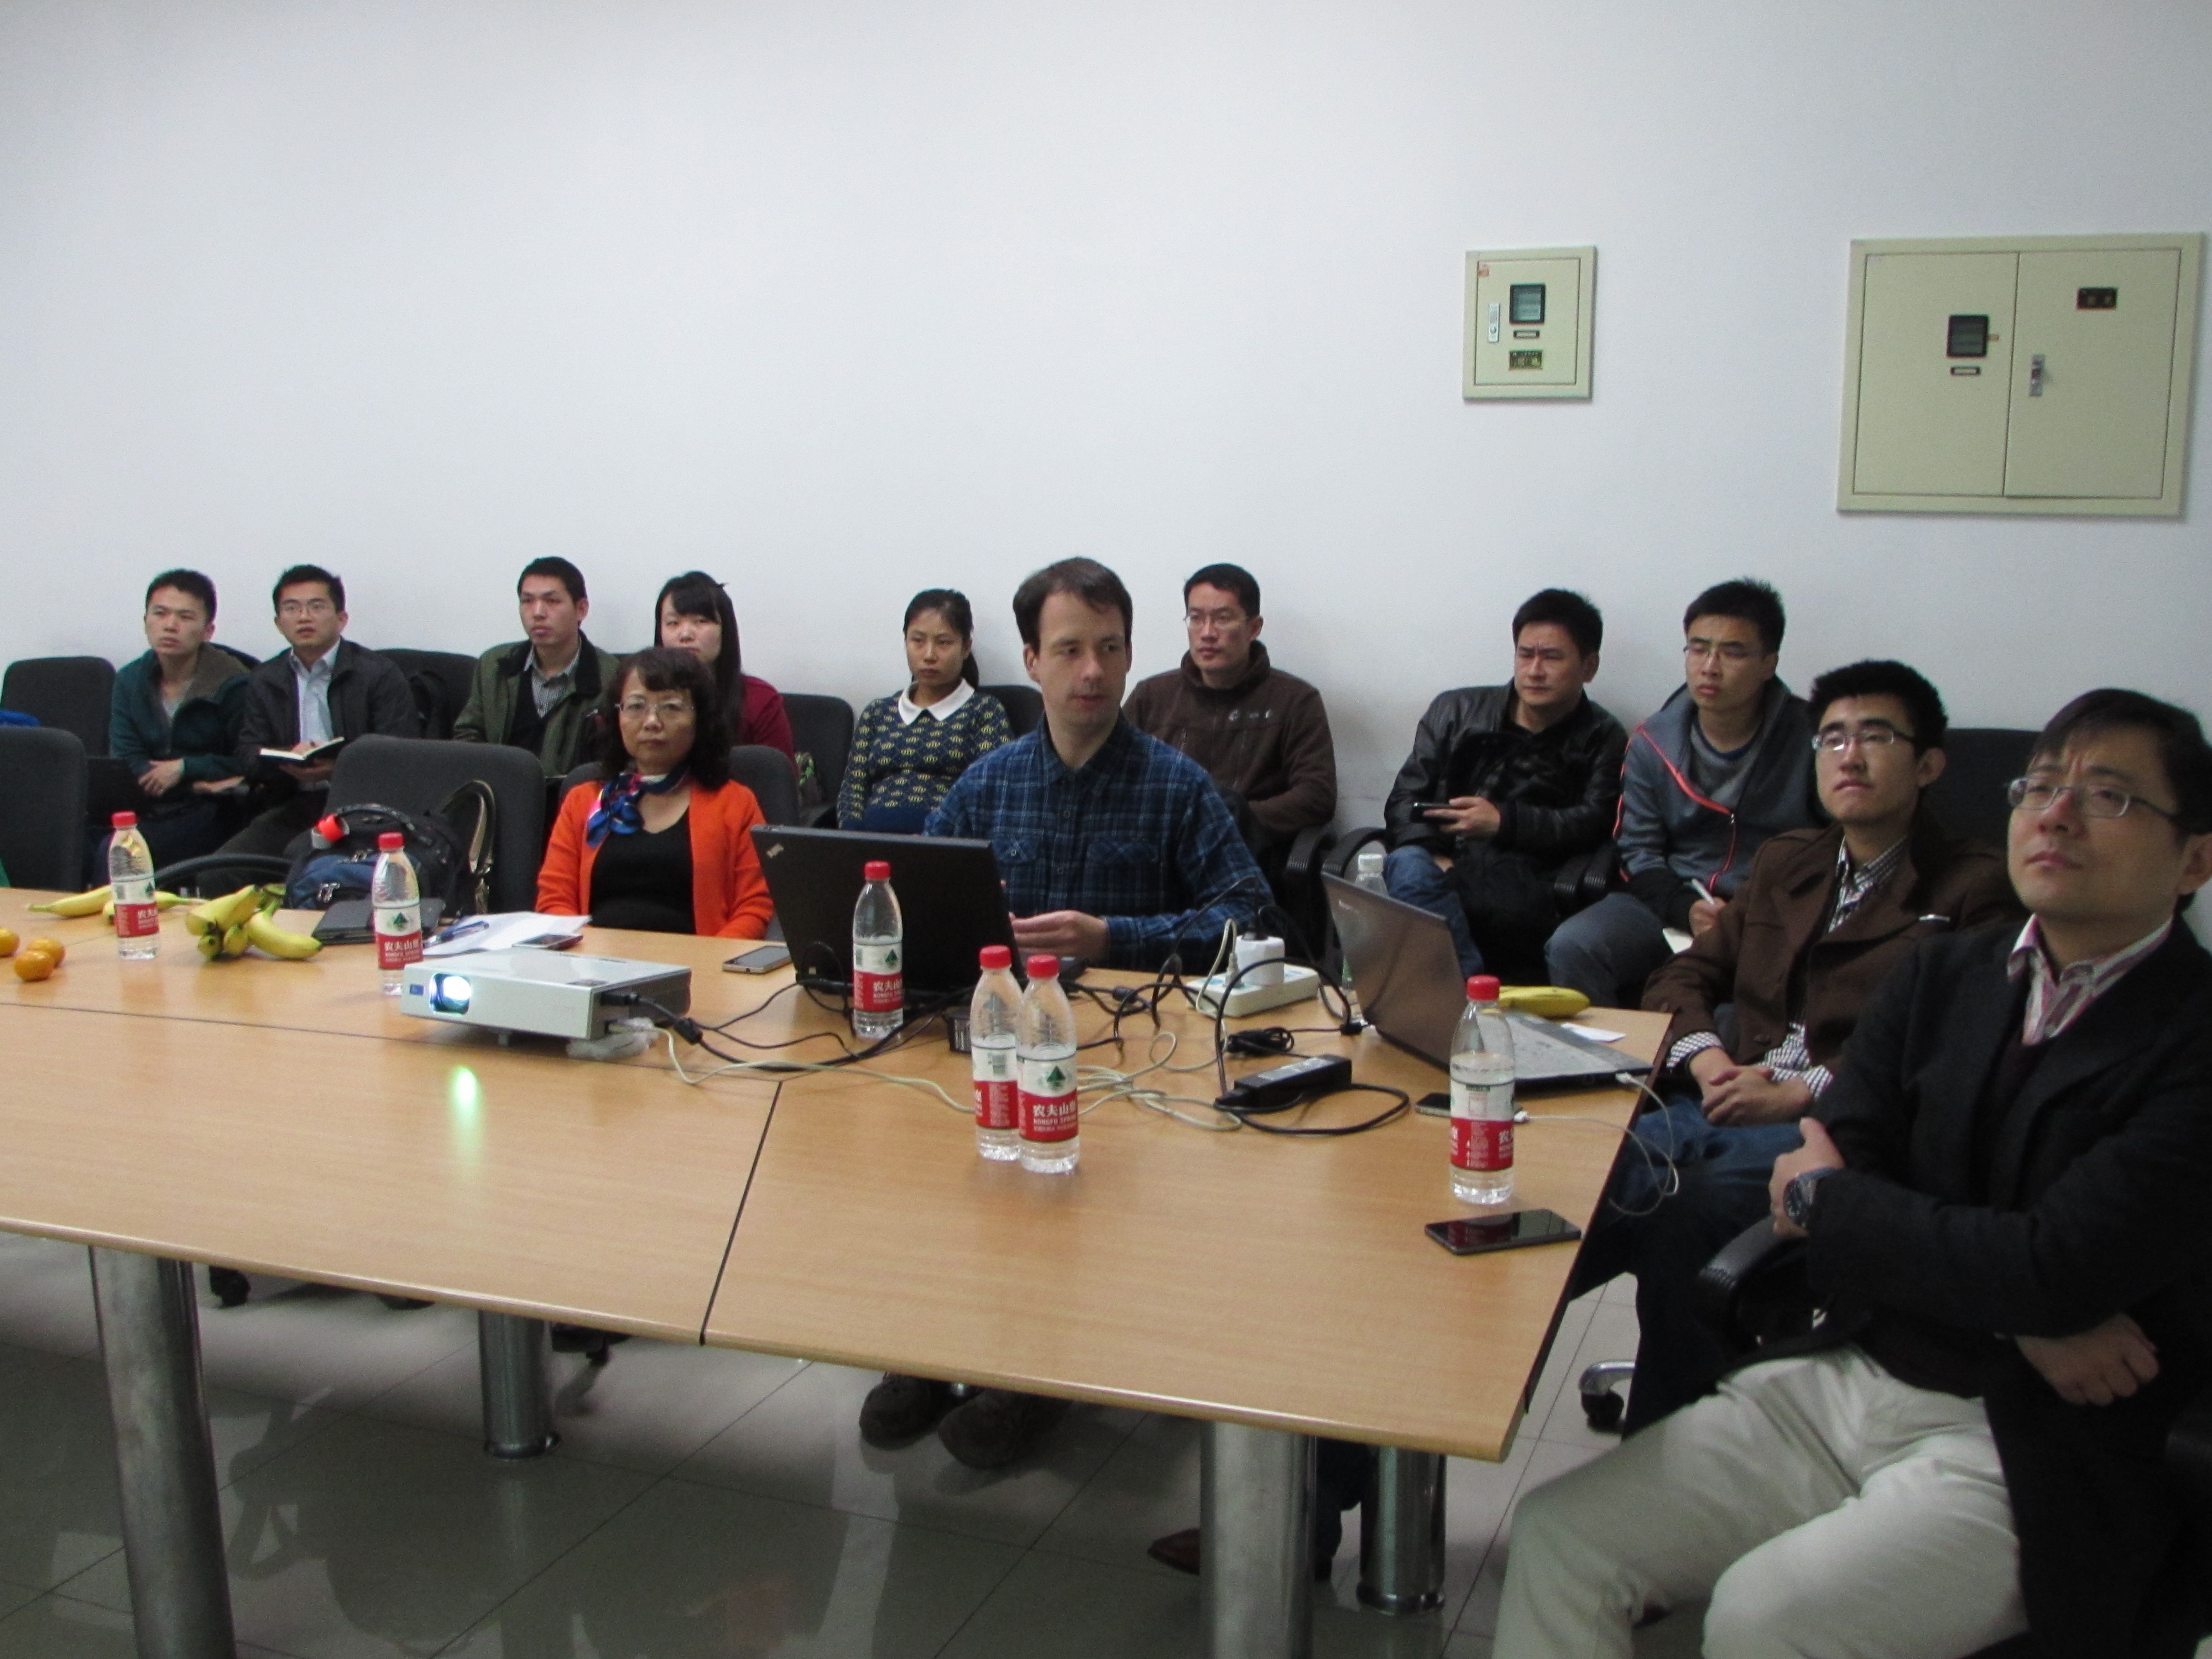 NorNet Presentation at Tsinghua University (清华大学) in Beijing (北京) by Thomas Dreibholz